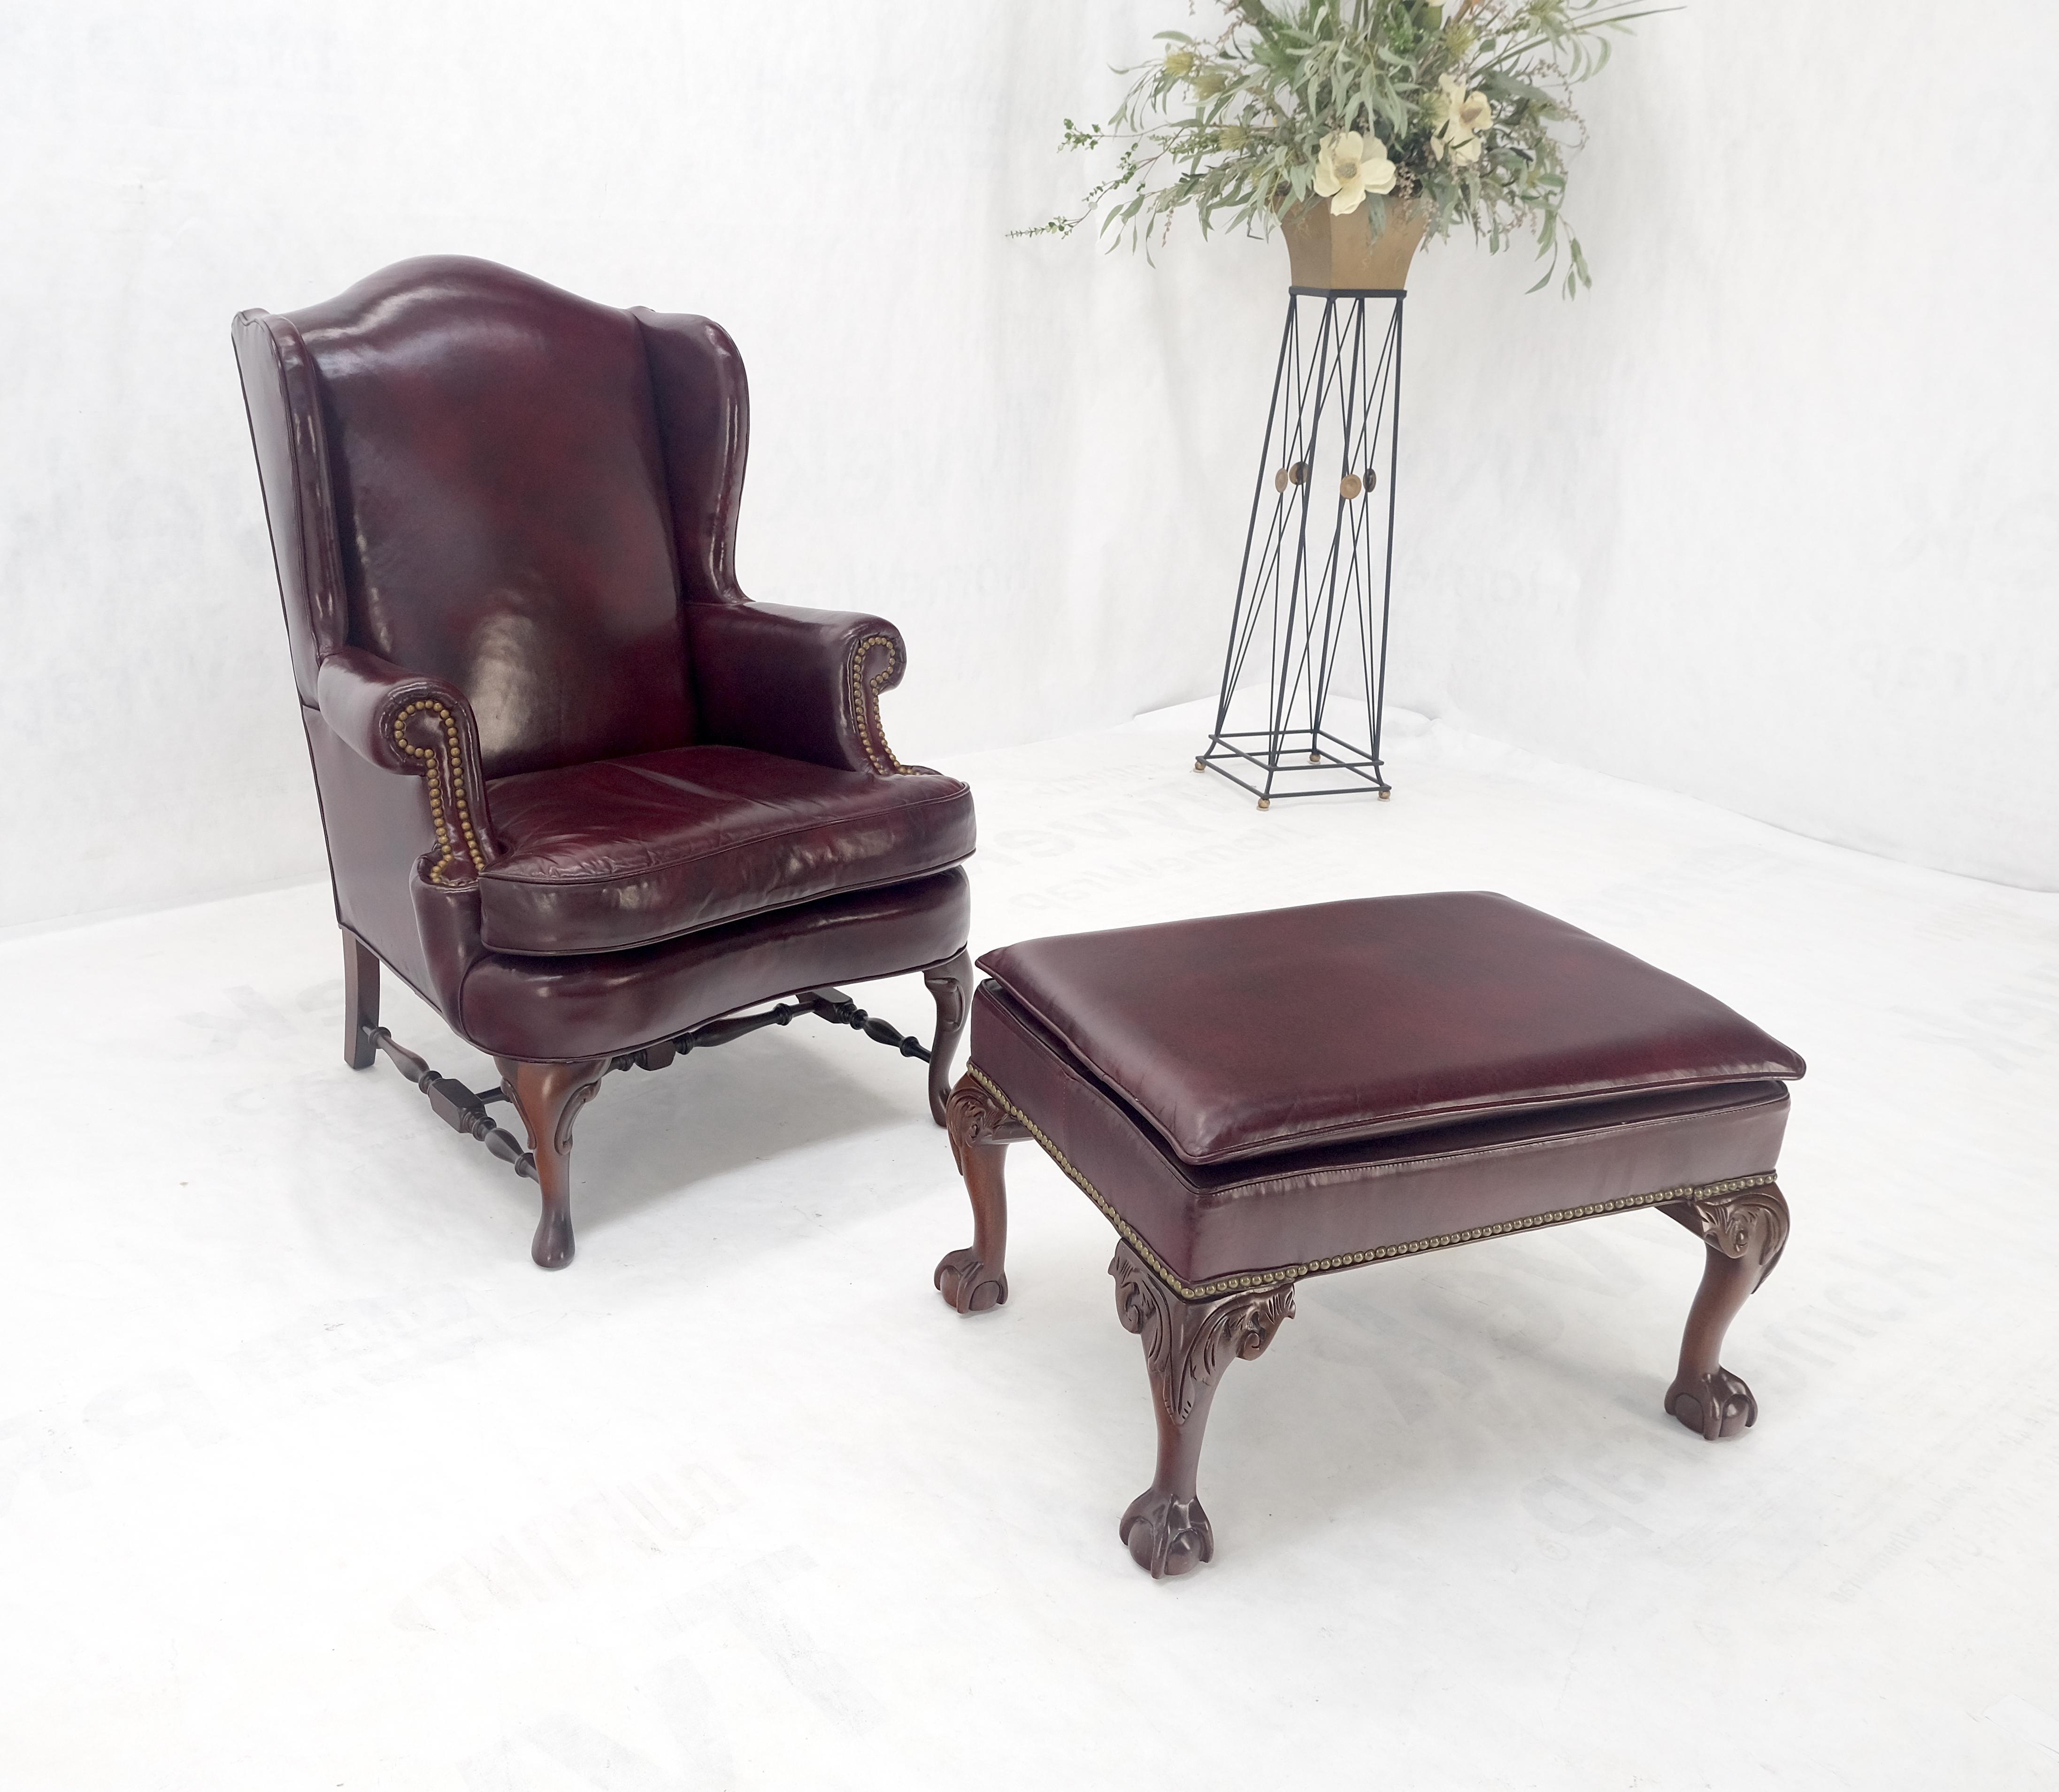 Cuir Kindel Burgundy Leather Upholstery Carved Mahogany Legs Wingback Chair & Ottoman en vente